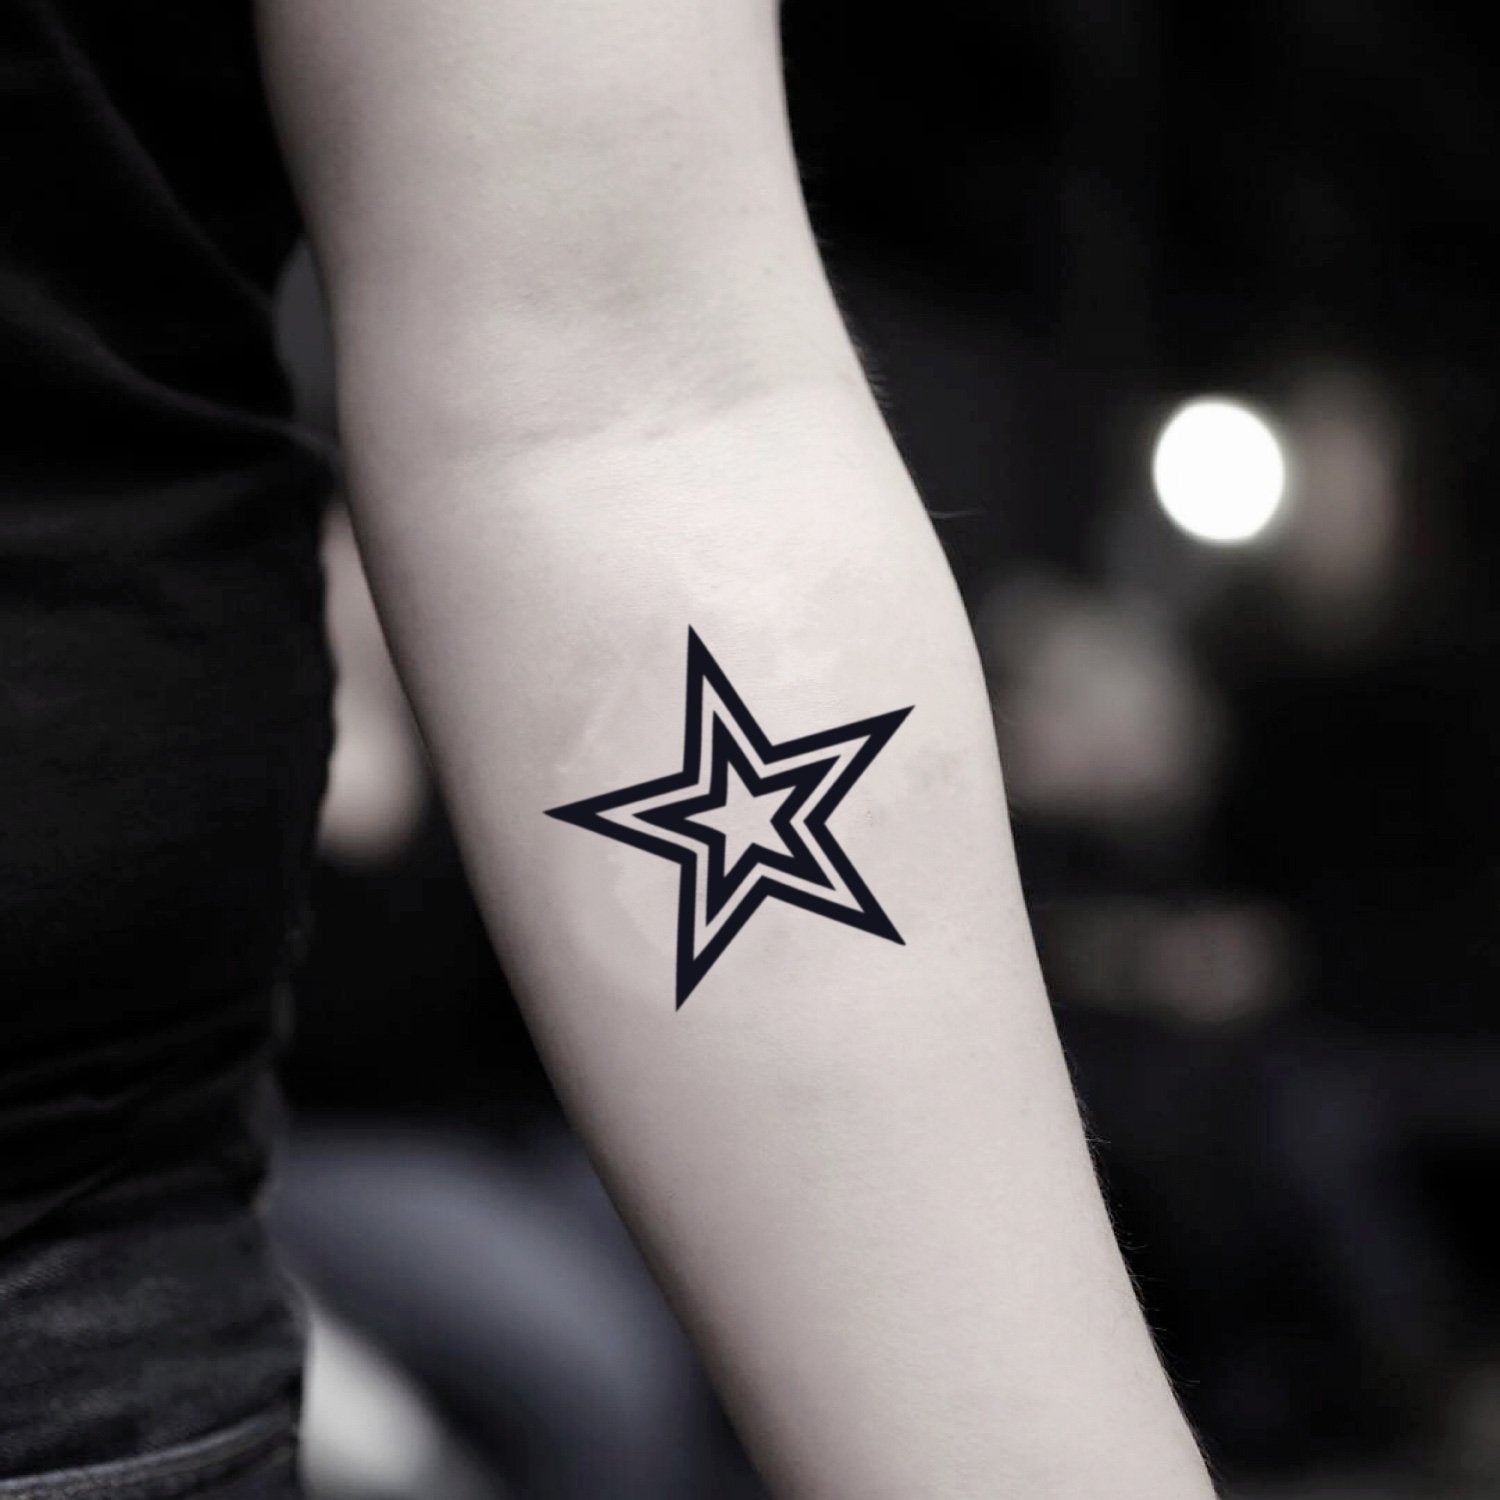 fake small black lucky star outline geometric temporary tattoo sticker design idea on inner arm